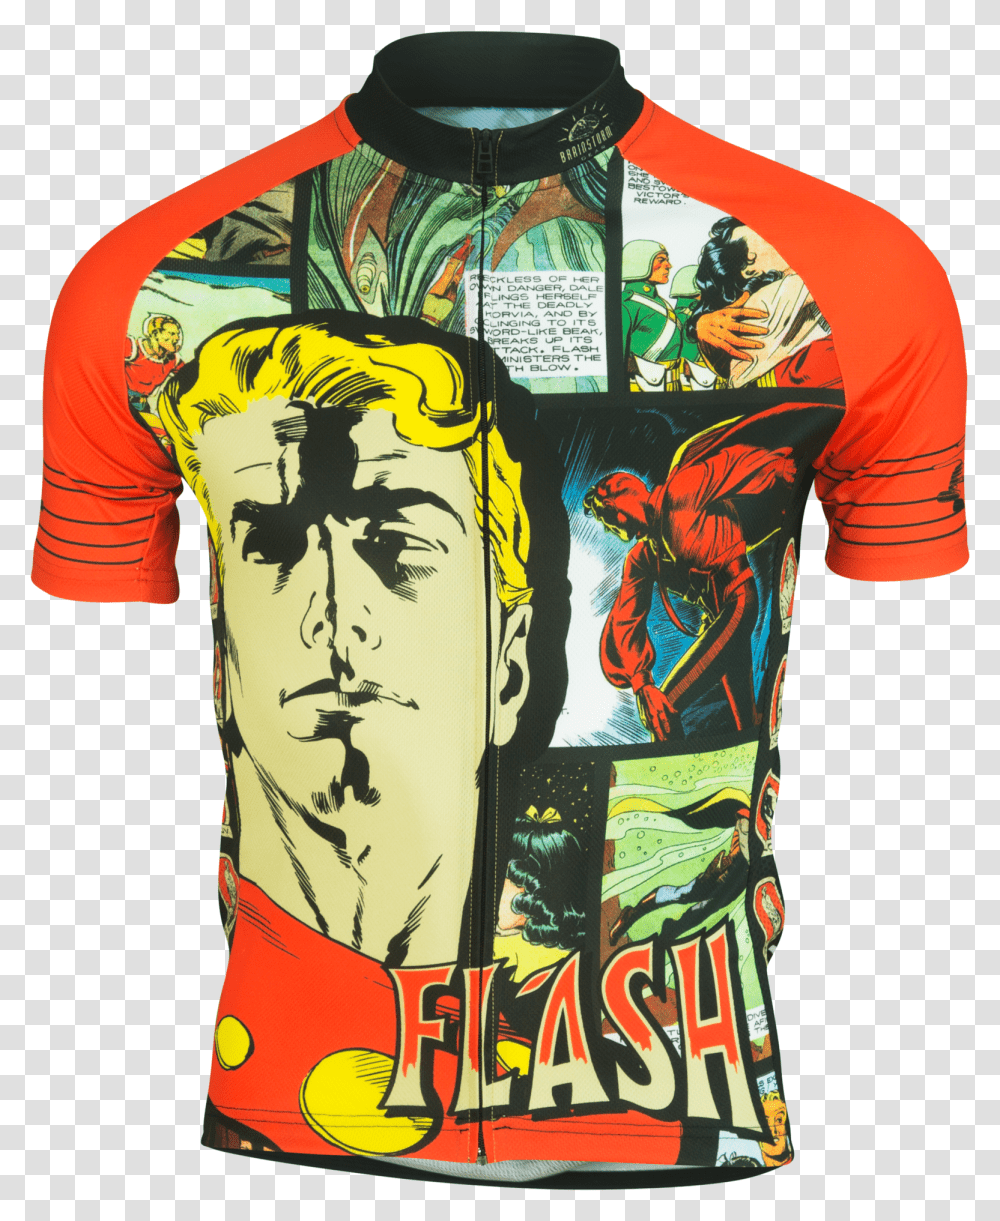 Download Flash Gordon Cycling Jersey Cycling Jersey Cycling, Clothing, Apparel, Shirt, T-Shirt Transparent Png